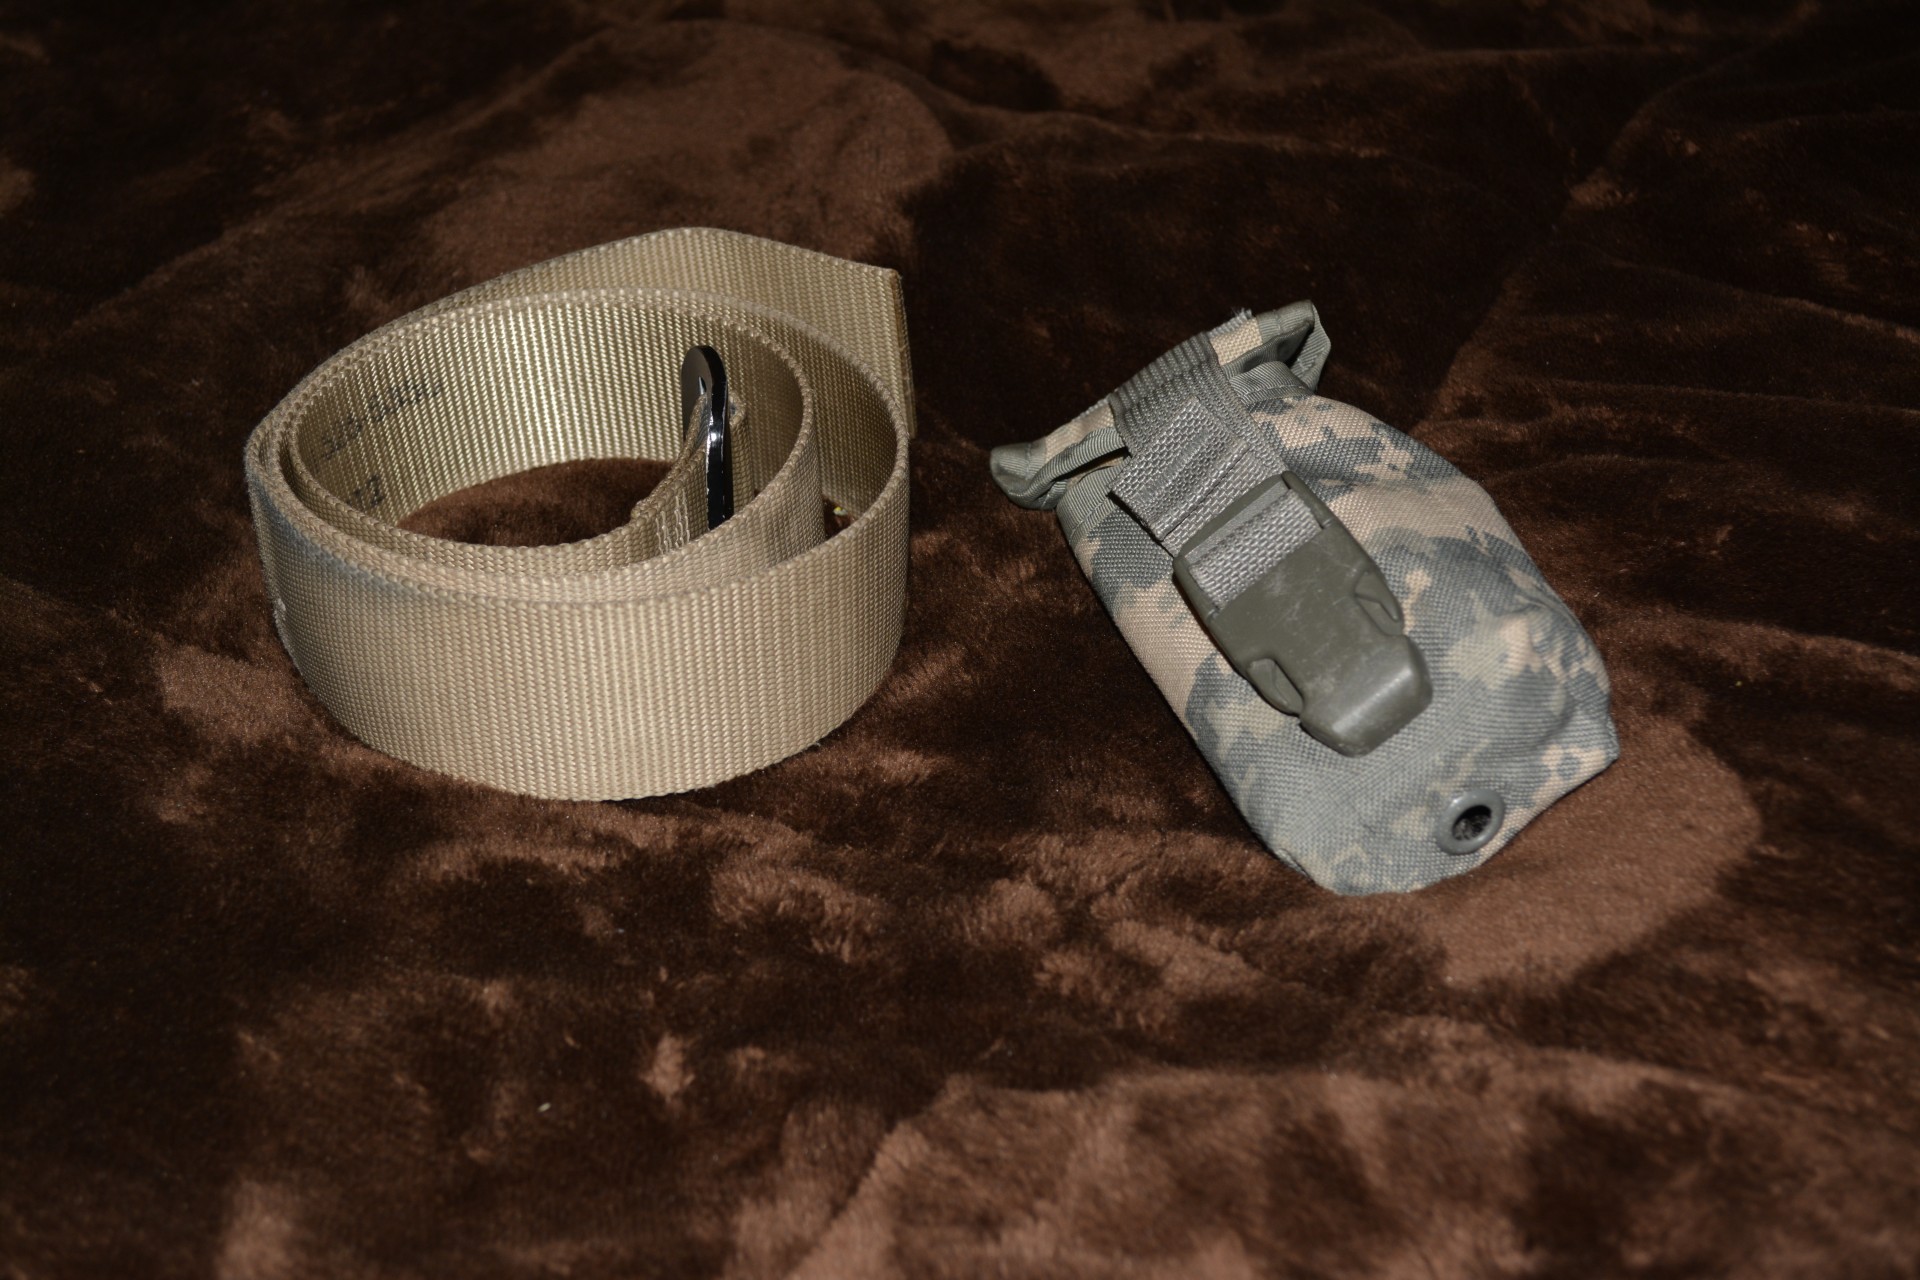 ACU Pattern Camouflage Uniform Belt